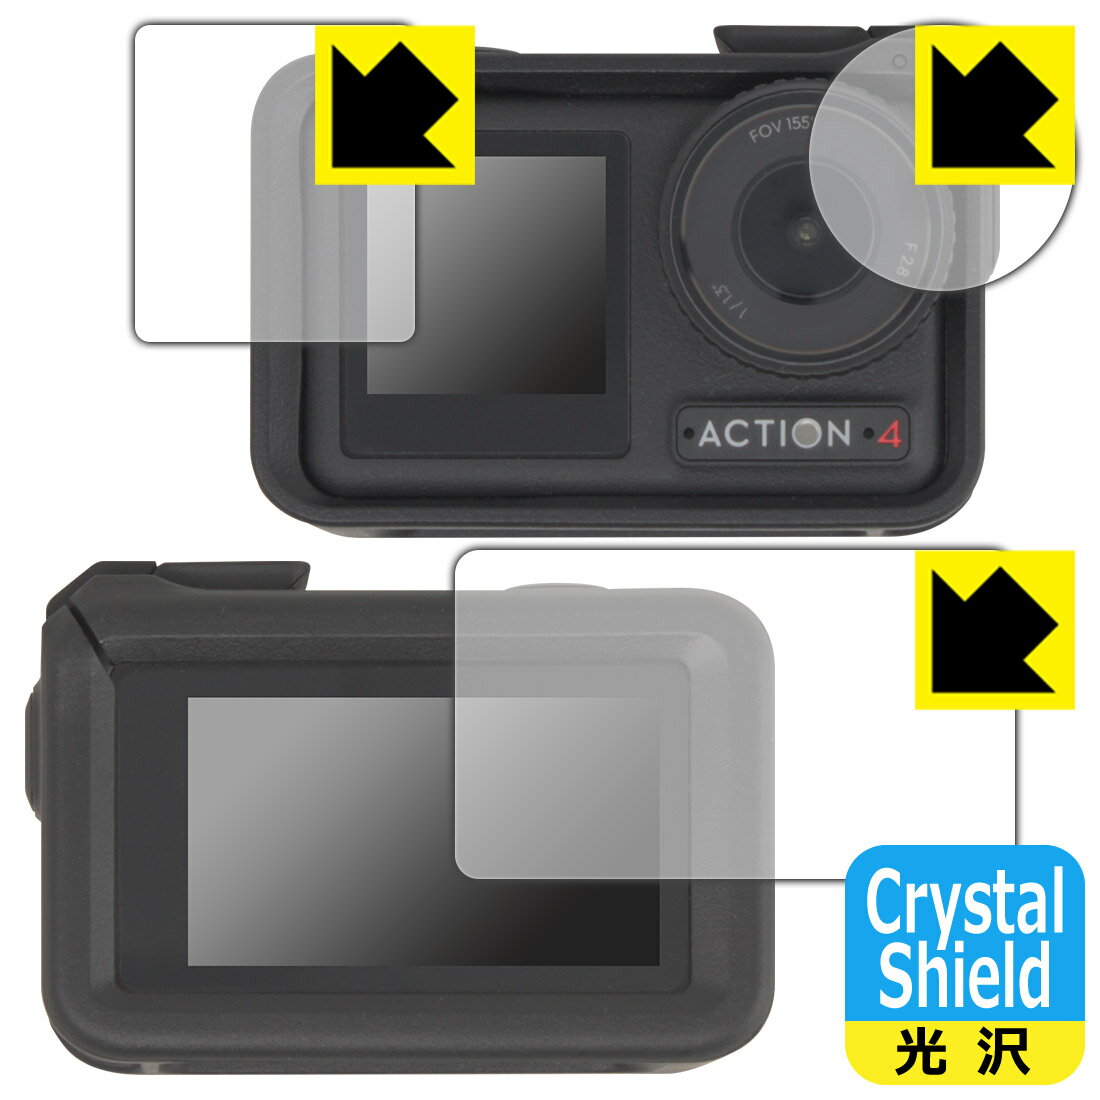 Crystal Shield【光沢】保護フィルム DJI Osmo Action 4 (メイン用/サブ用/レンズ部用) 【保護フレーム装着あり対応】 日本製 自社製造直販